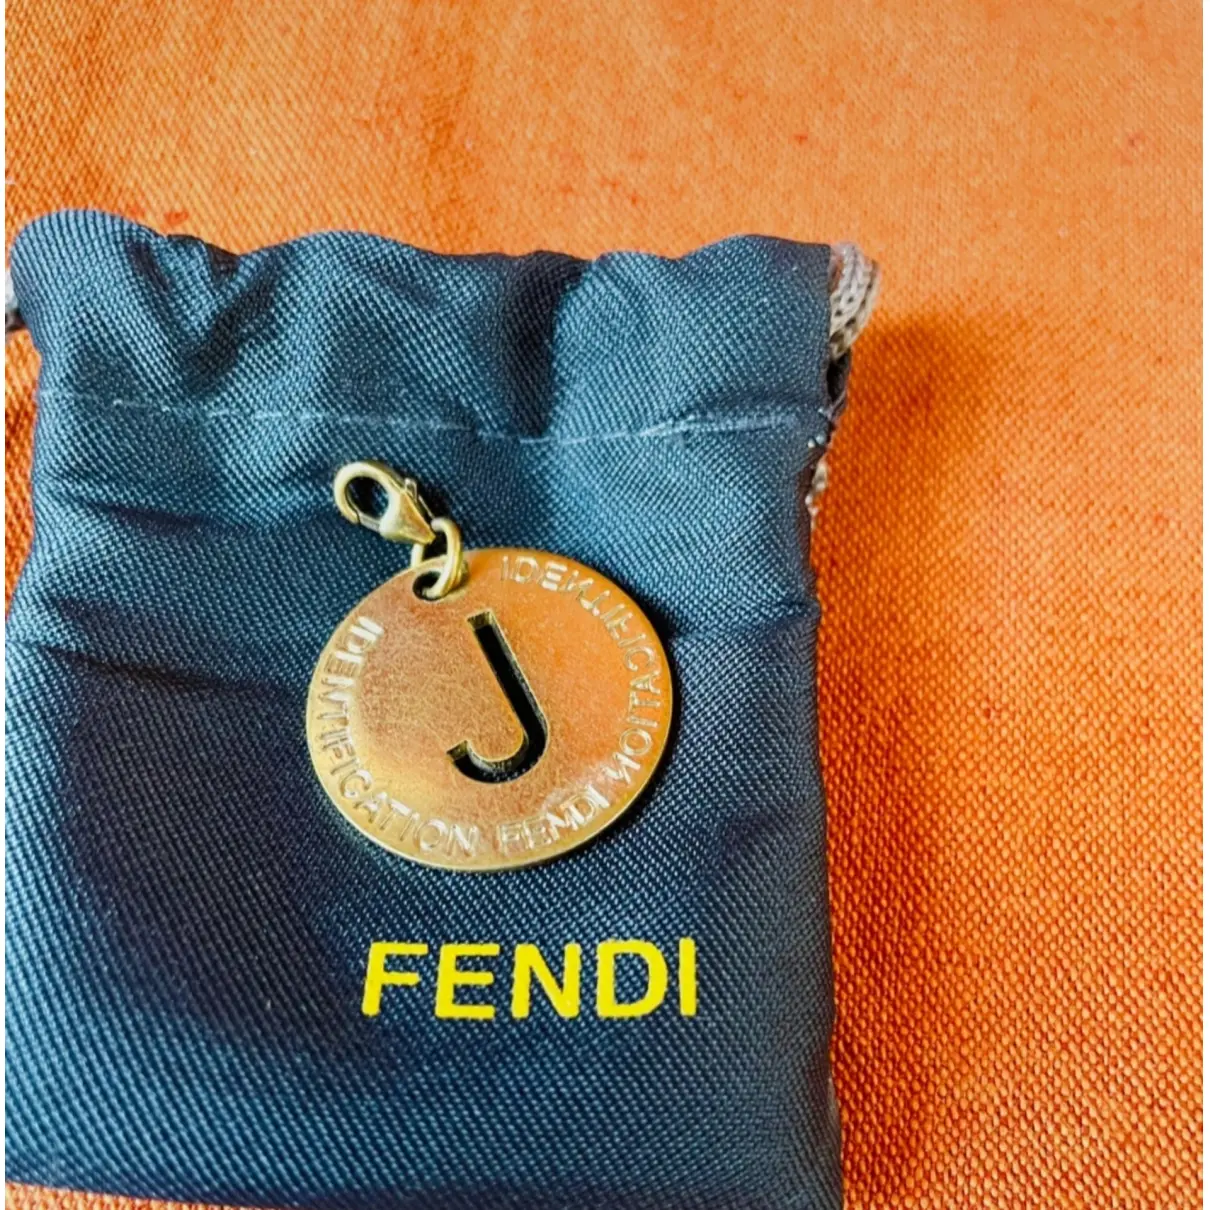 Buy Fendi The Fendista pendant online